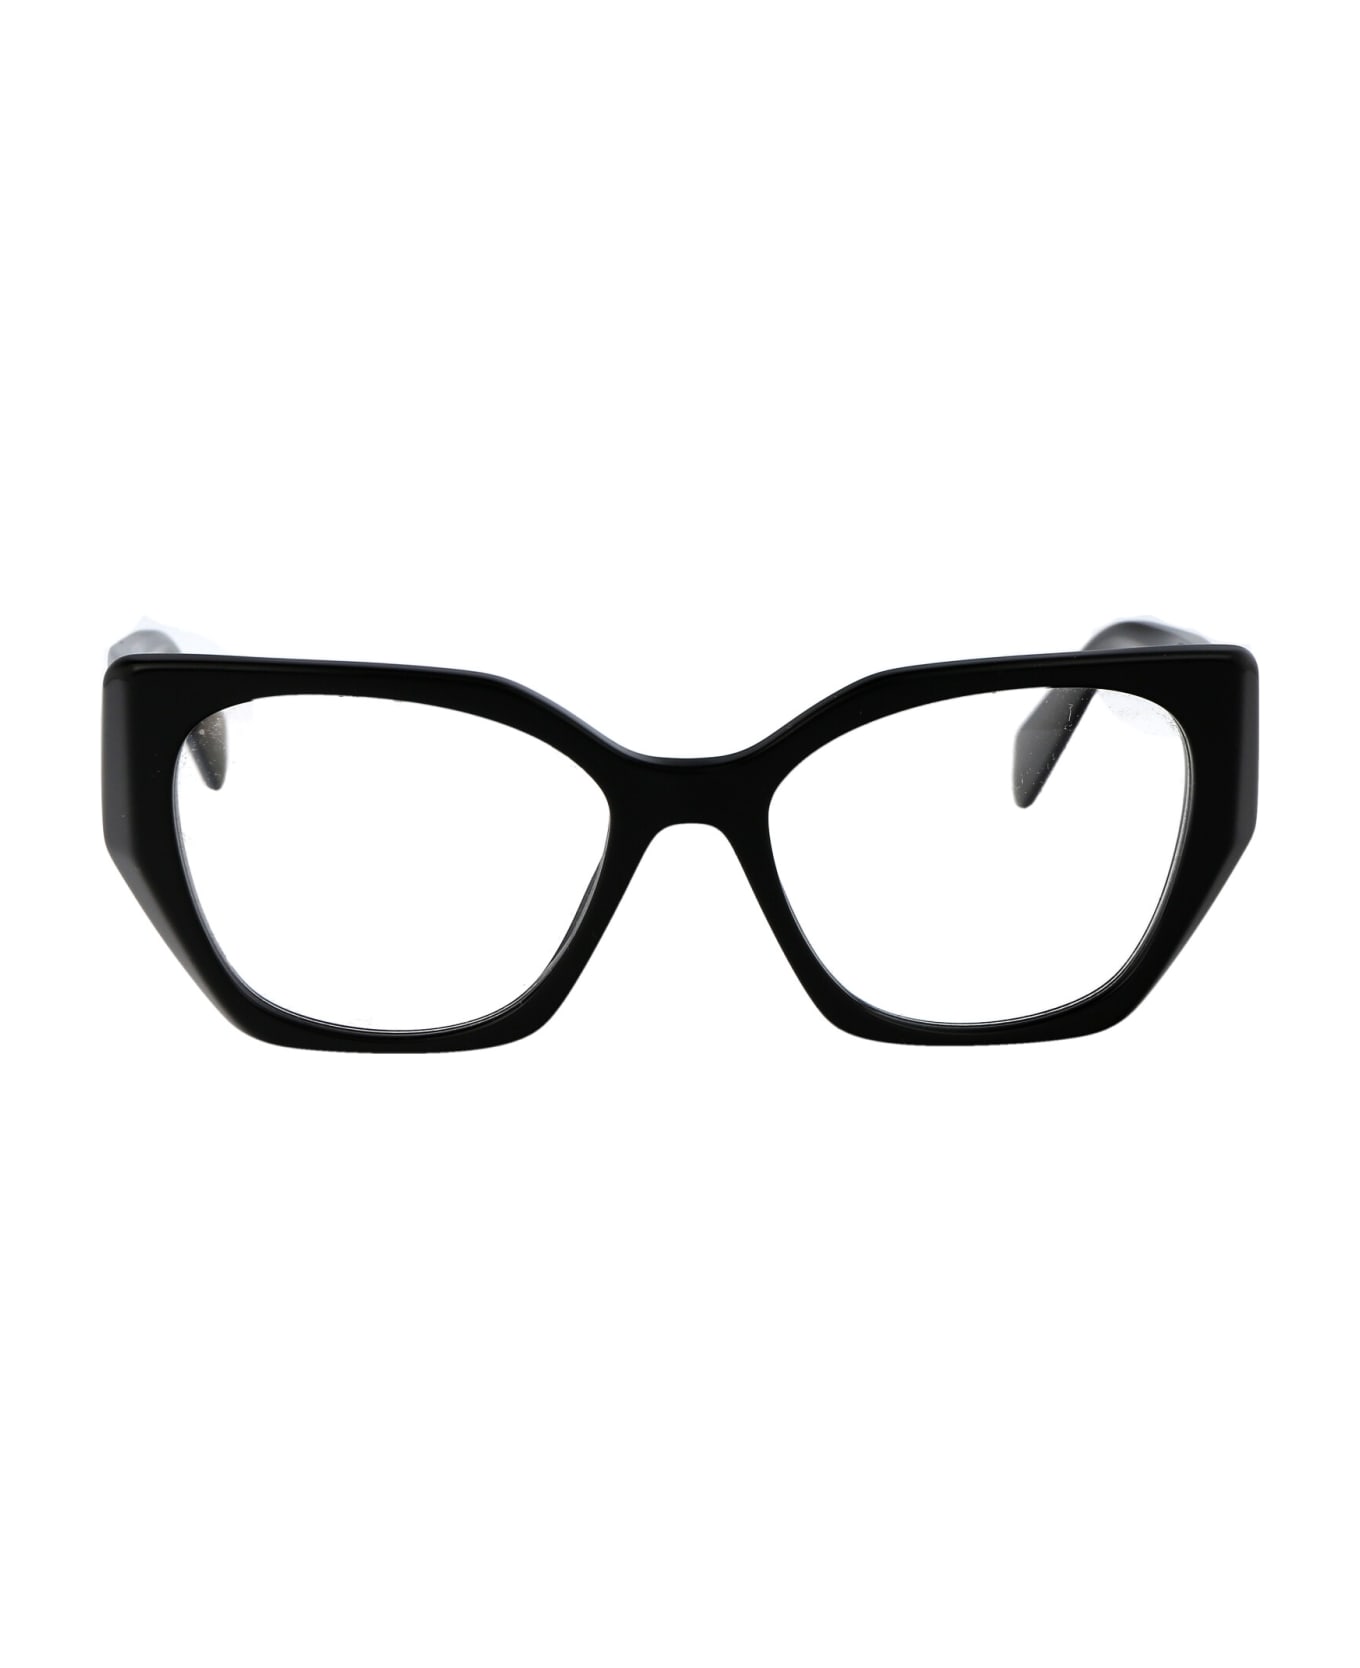 Prada Eyewear 0pr 18wv Glasses - 1AB1O1 BLACK